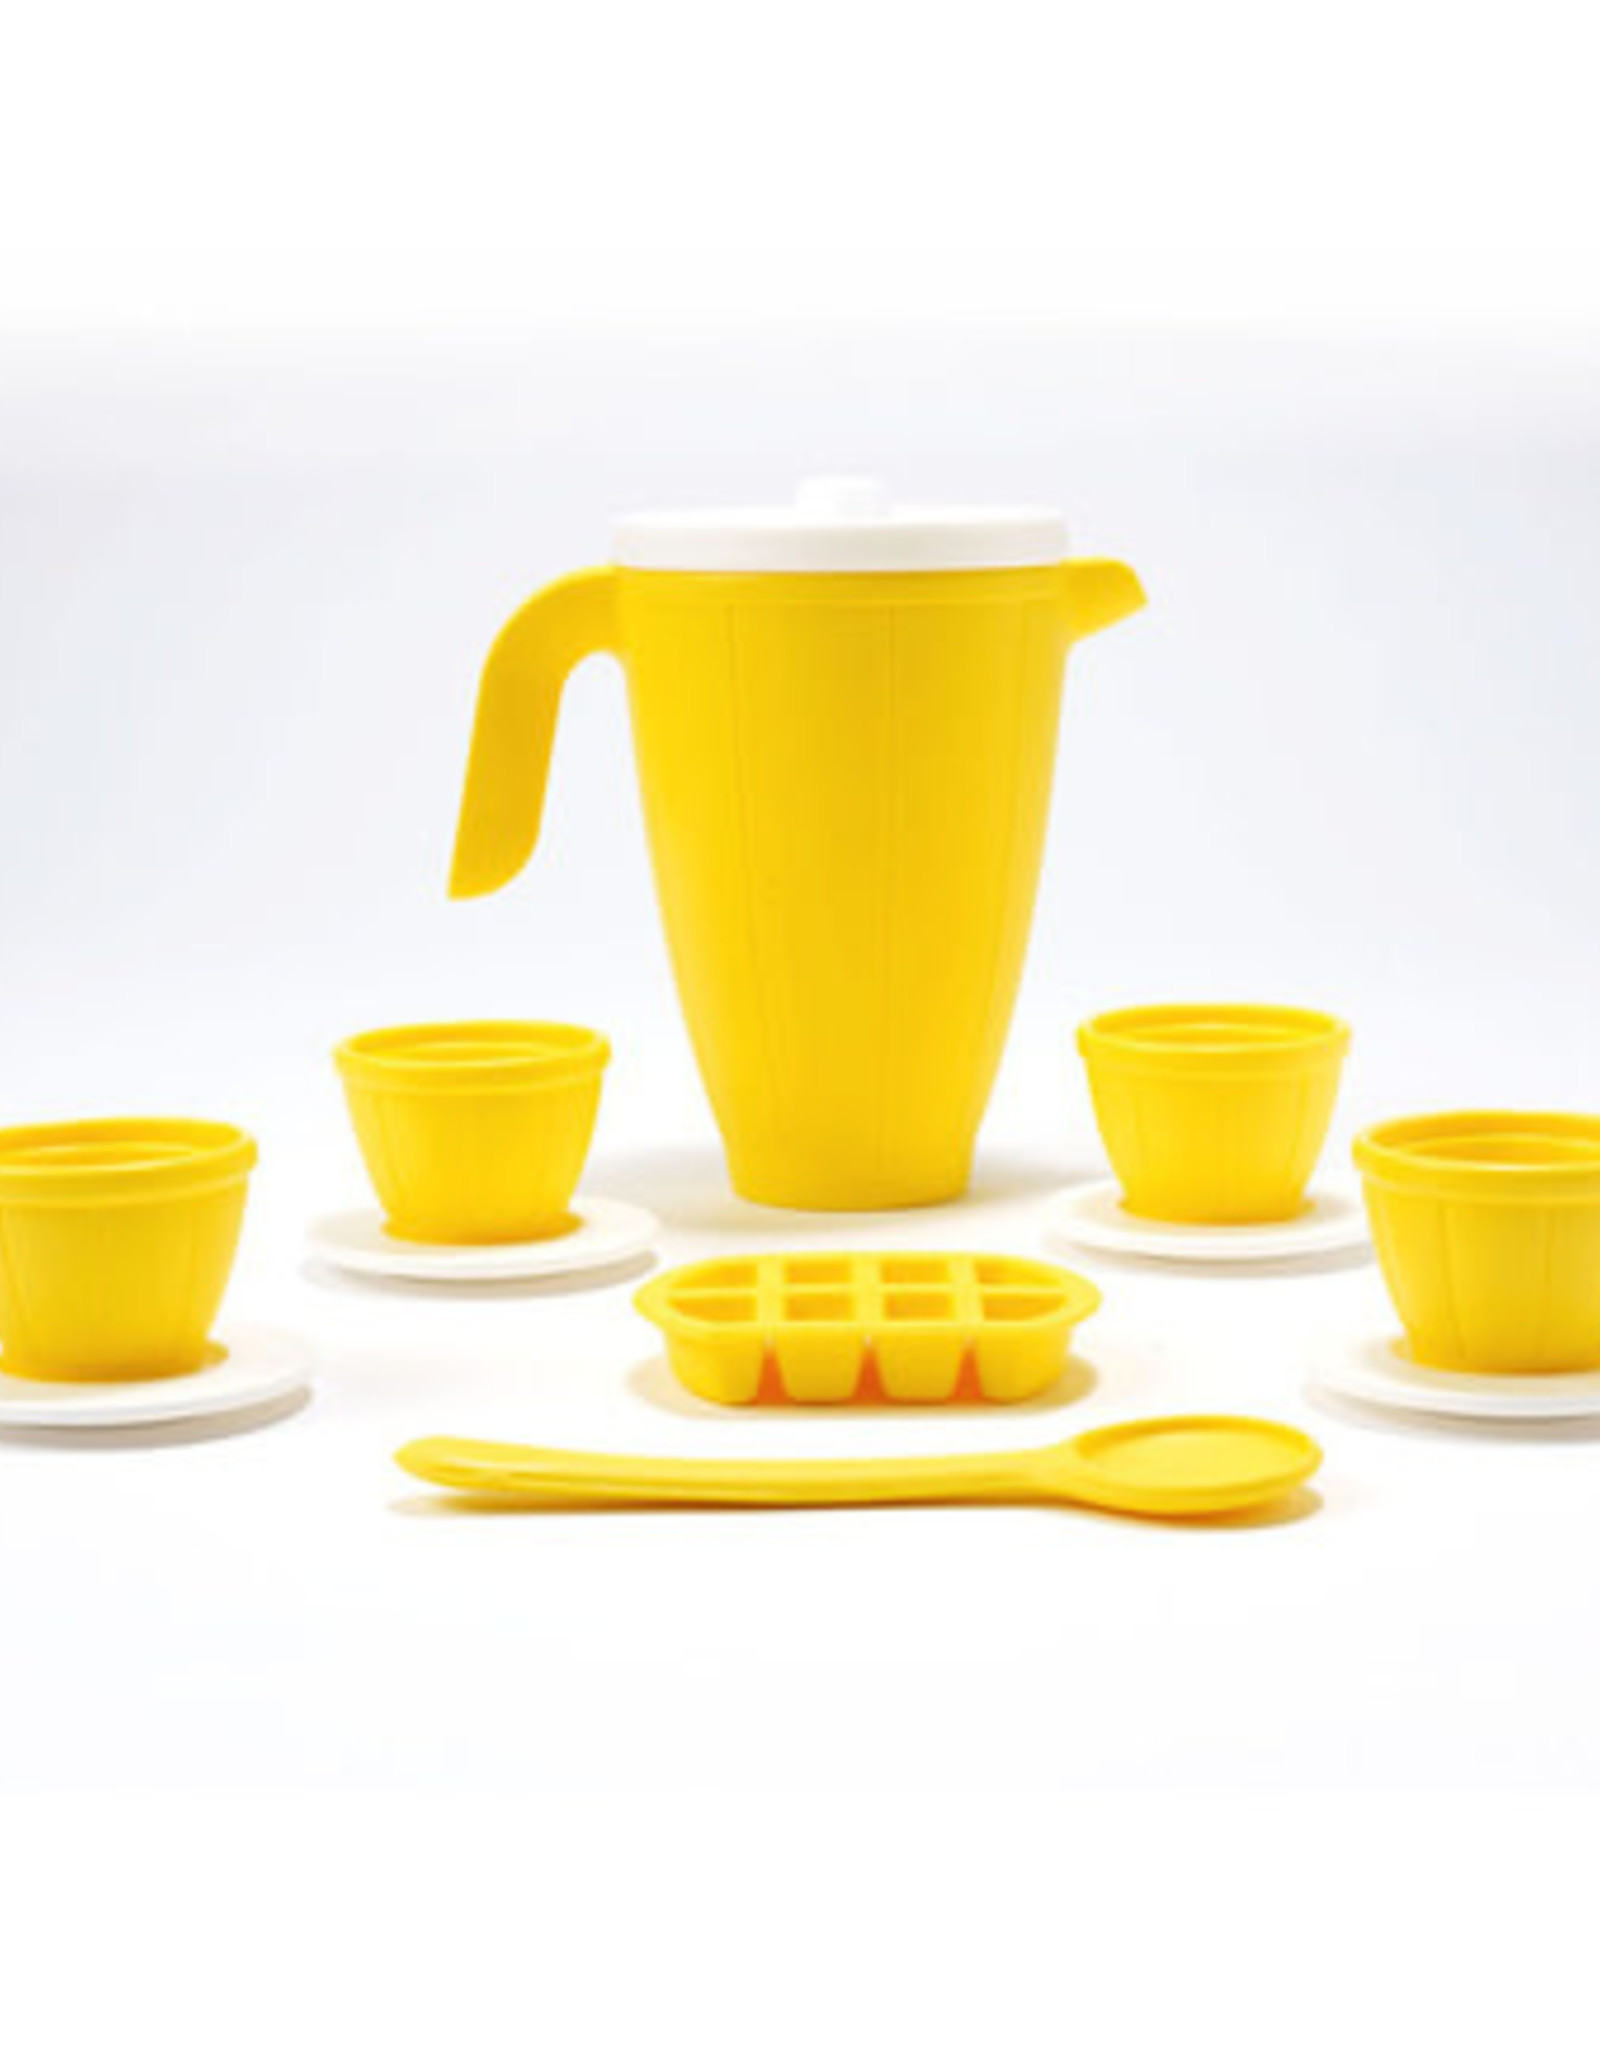 Stortz & Associates The lemonade Set